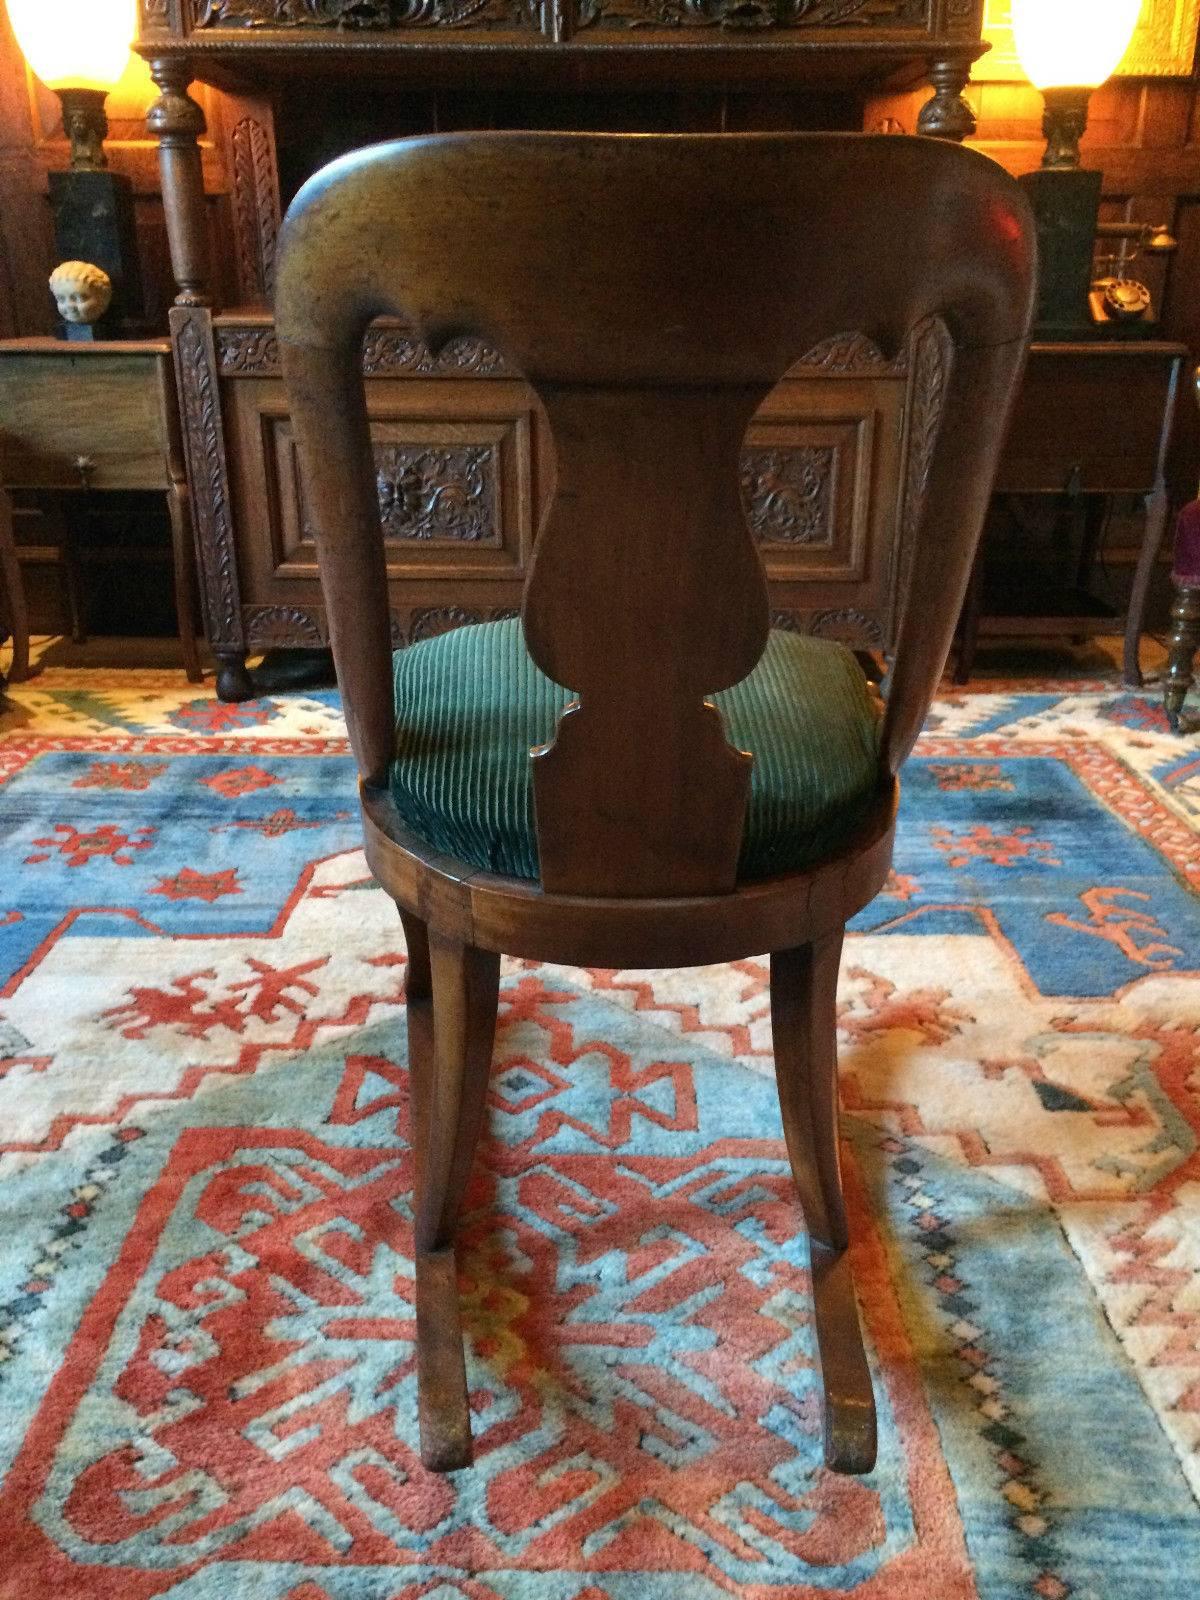 19th century rocking chairs